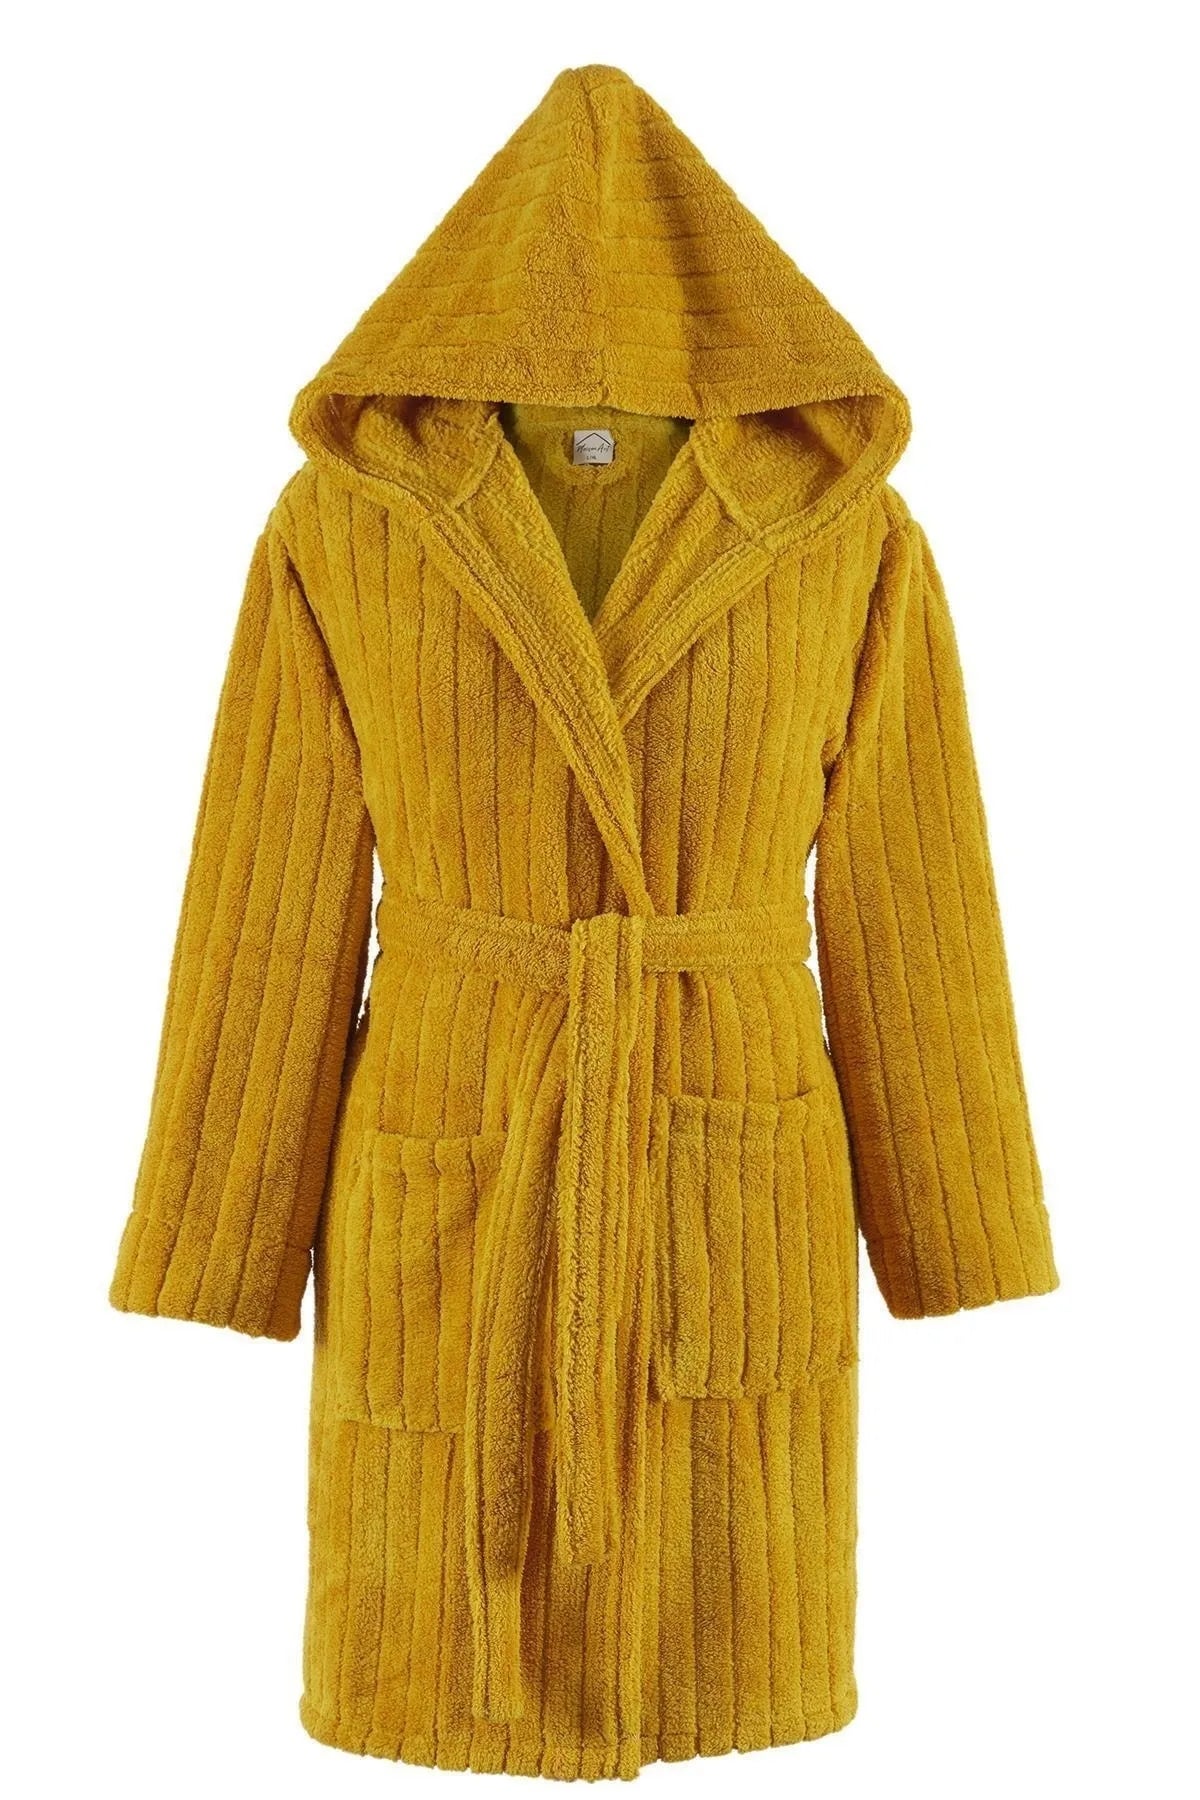 Zeynep Tekstil Women's Yellow Comfy Luxurious Hooded Wellsoft Plush Bathrobe